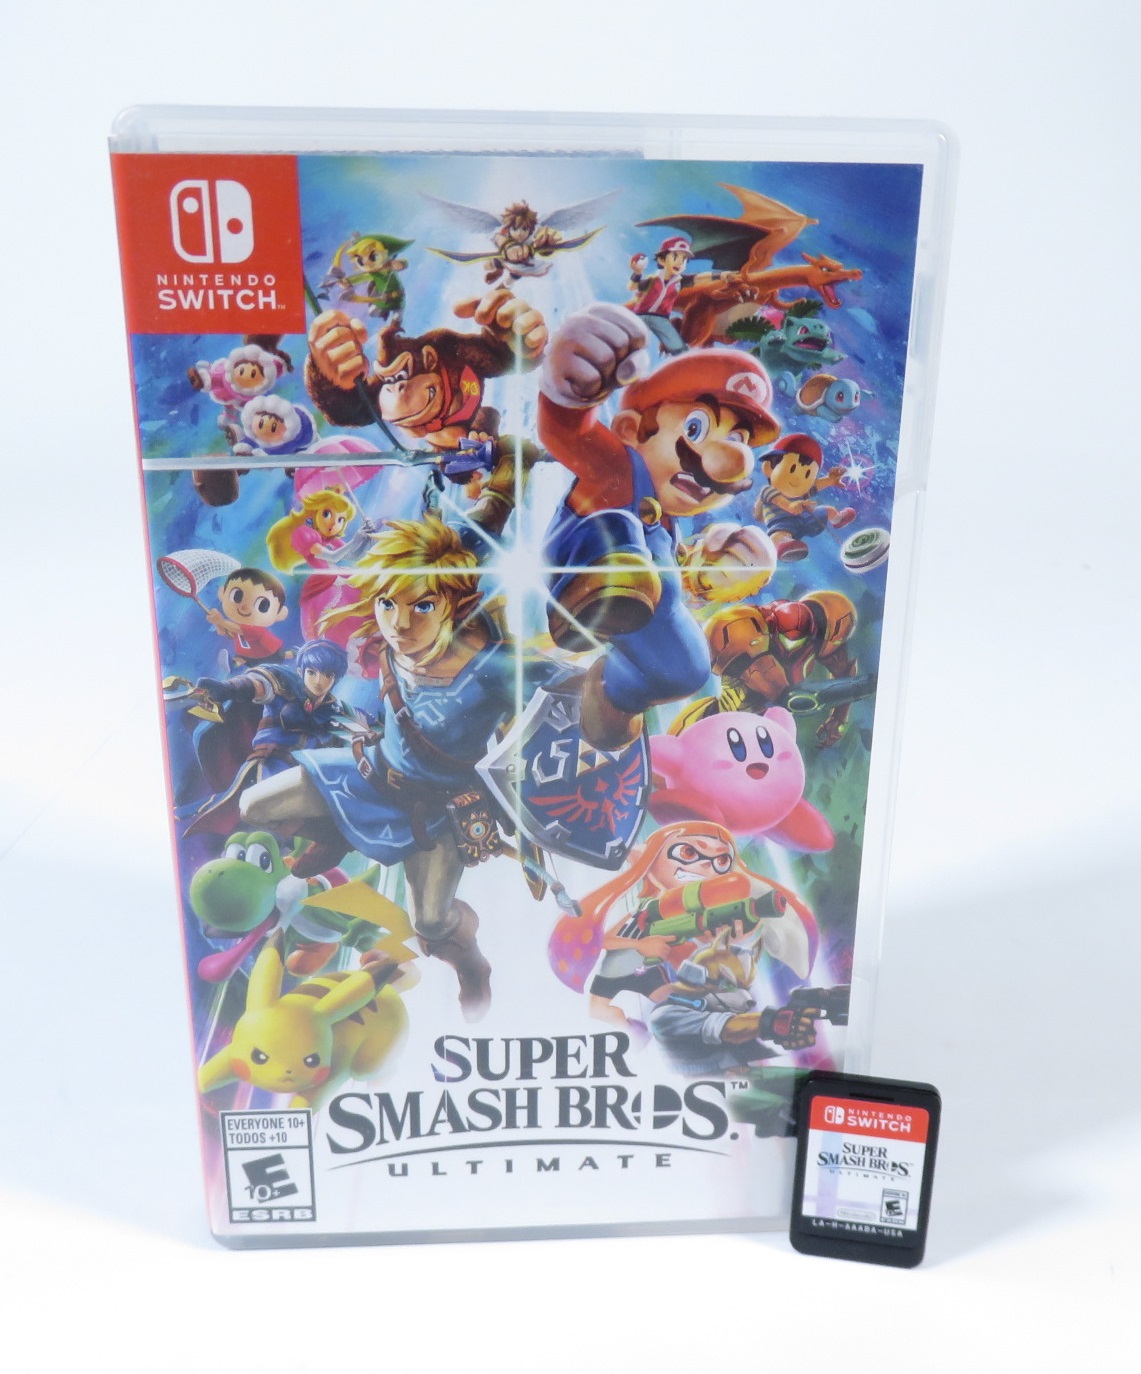 Buy Super Smash Bros. Ultimate Nintendo Switch key!